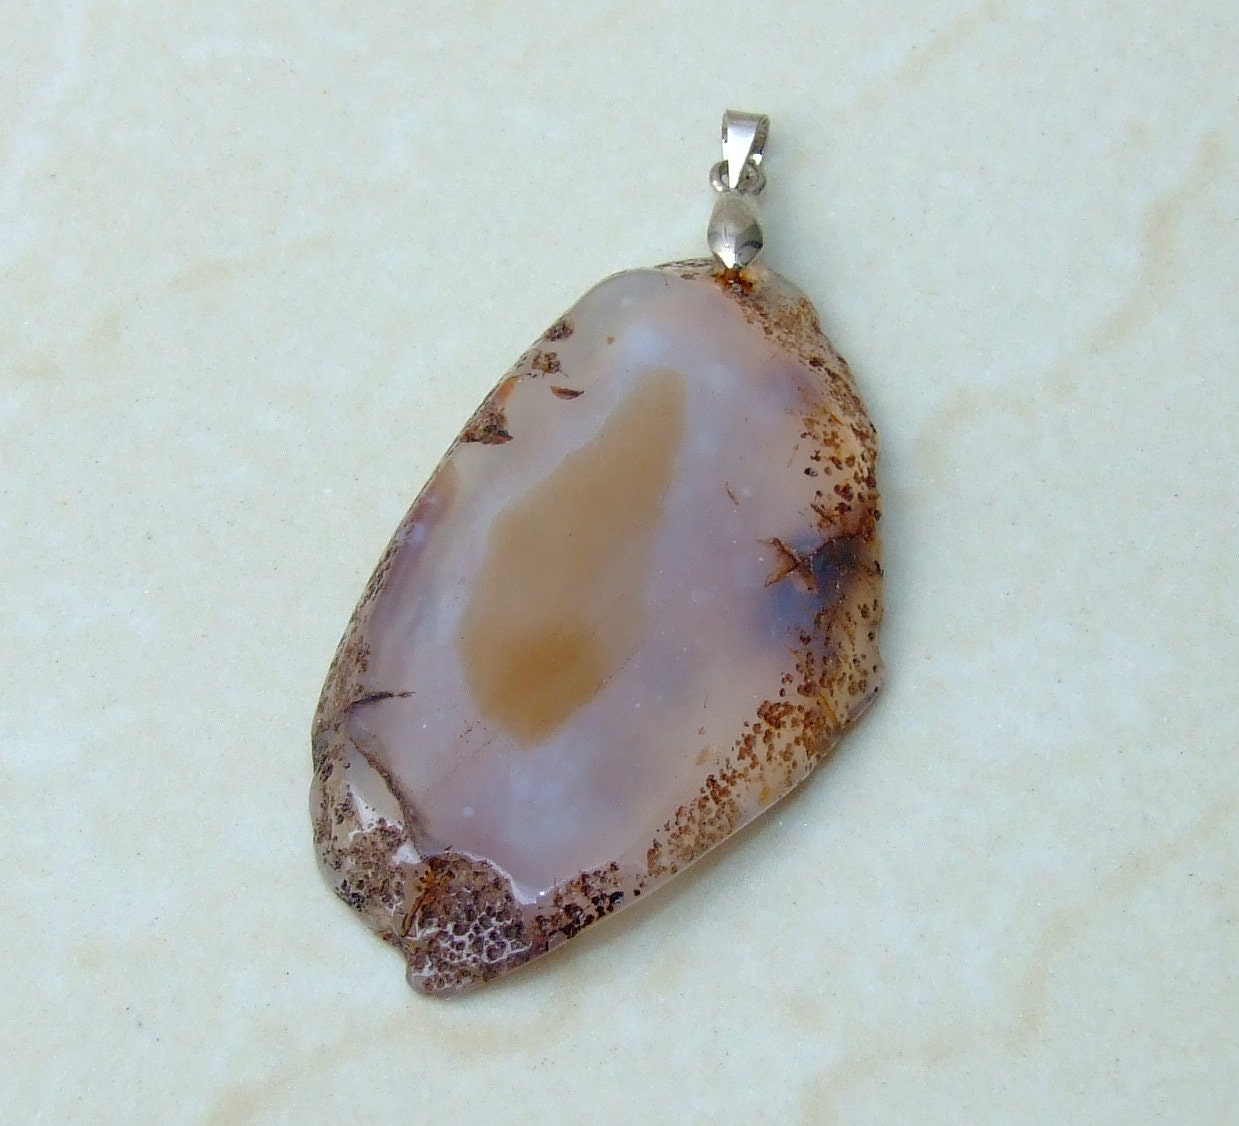 Natural Dendritic Agate Pendant, Gemstone Pendant, Agate Slice Pendant, Jewelry Stone Pendant, Agate Necklace Pendant - 31mm x 54mm - 6922